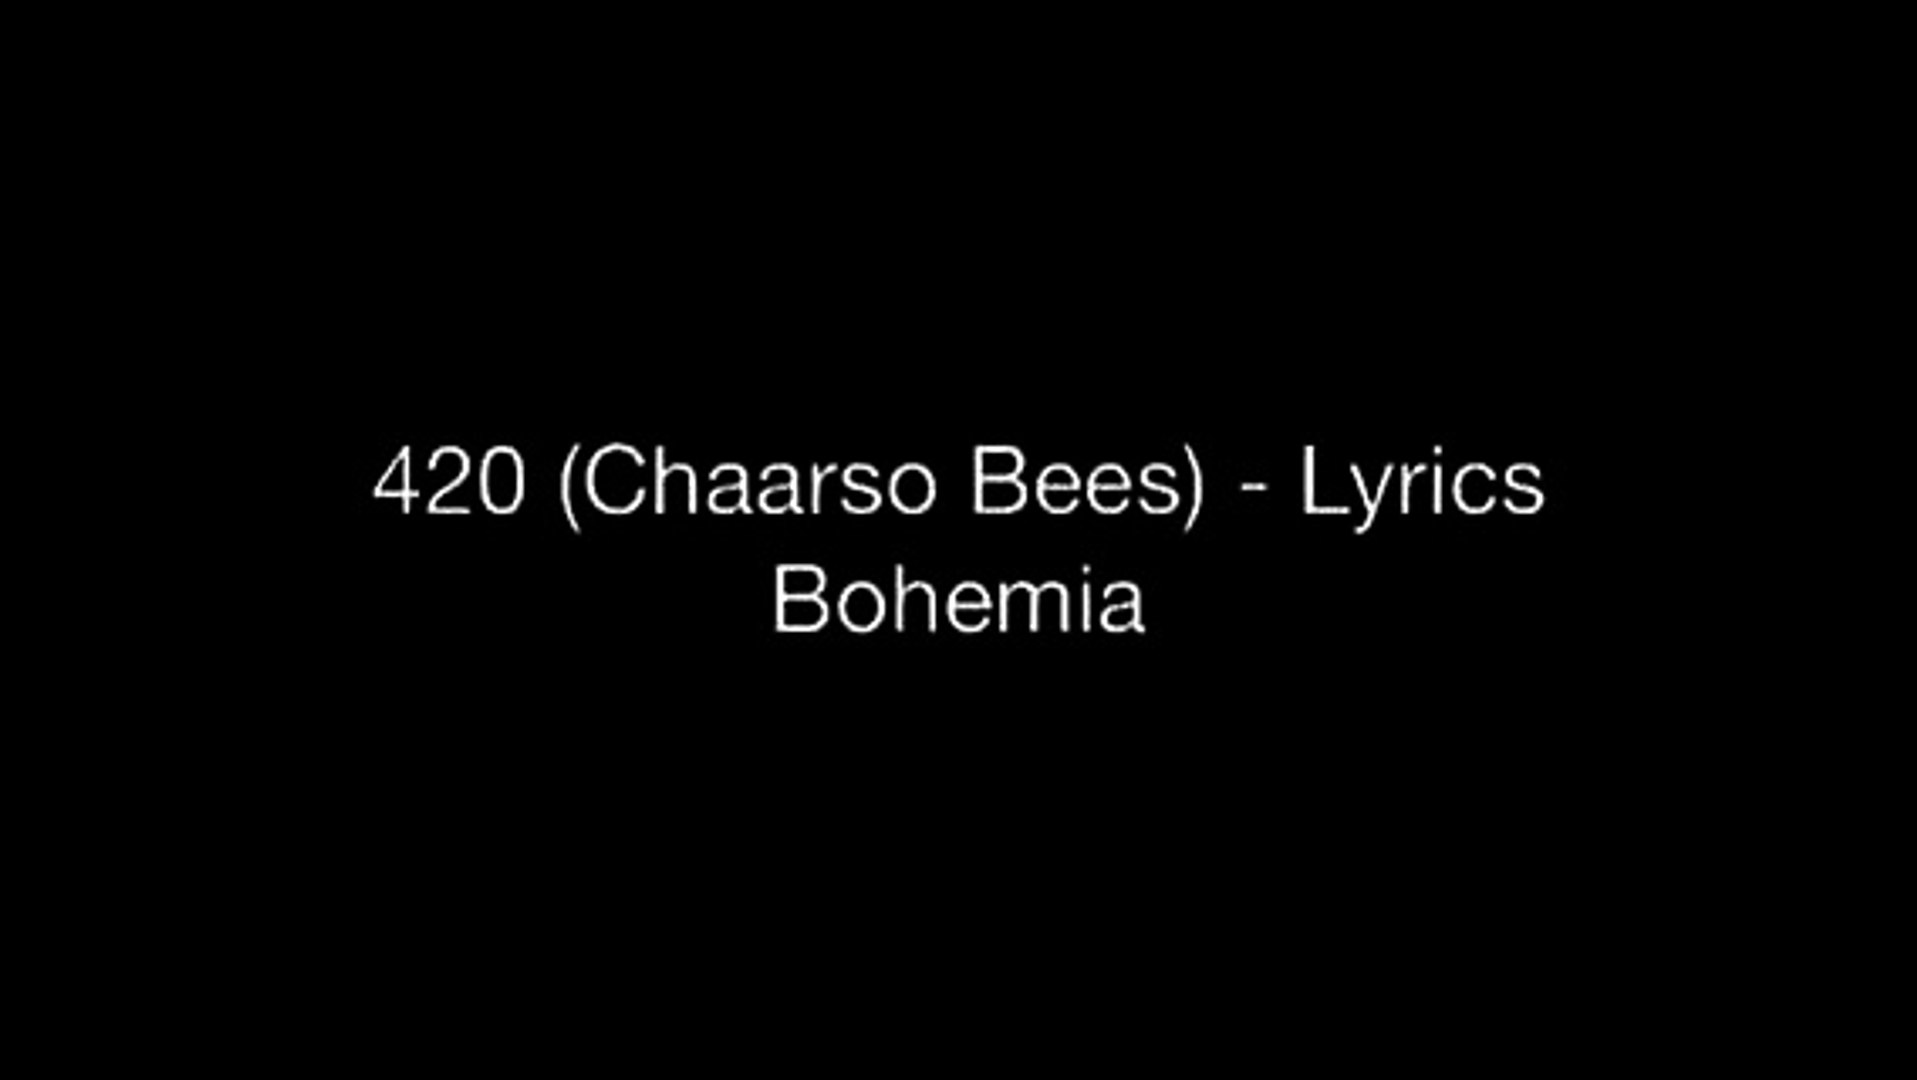 bohemia 420